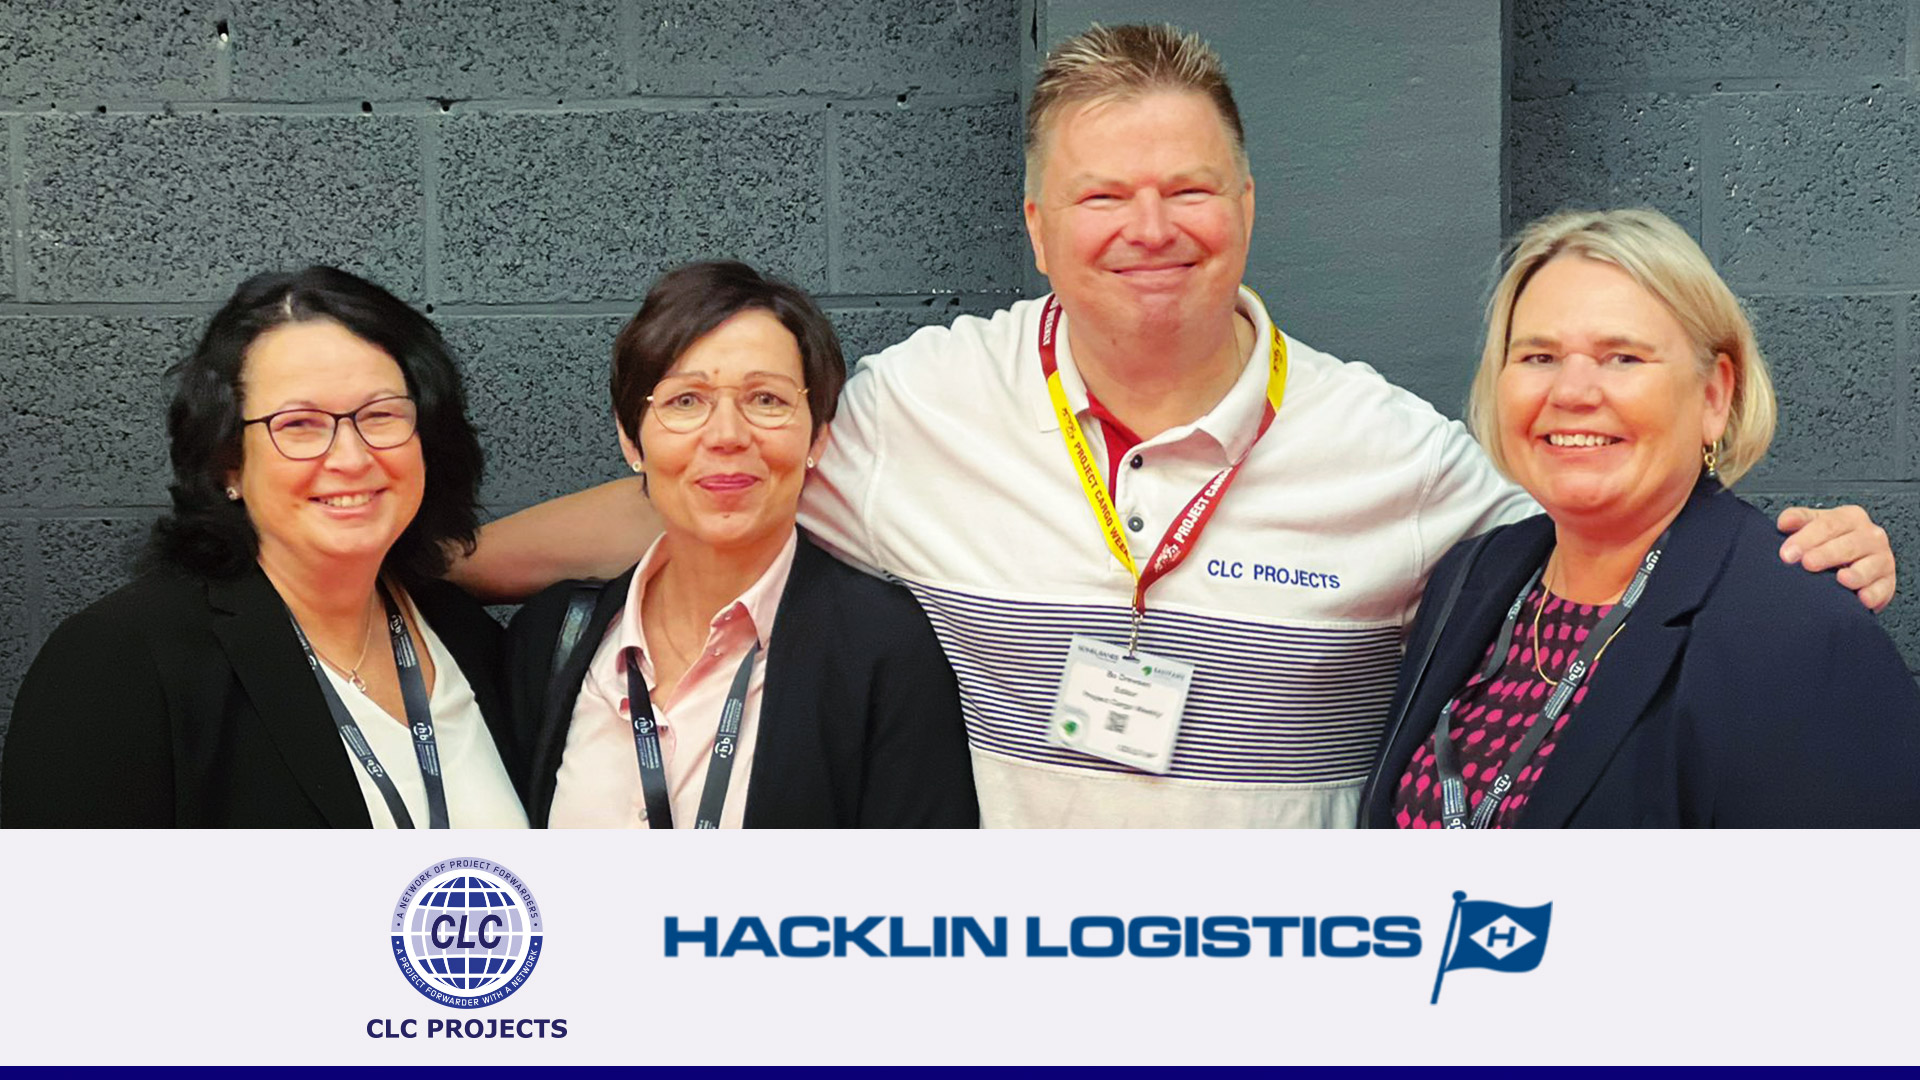 CLC Projects with Eija Heinonen, Johanna Järvinen & Marianne Blechingberg of Hacklin Logistics at AntwerpXL